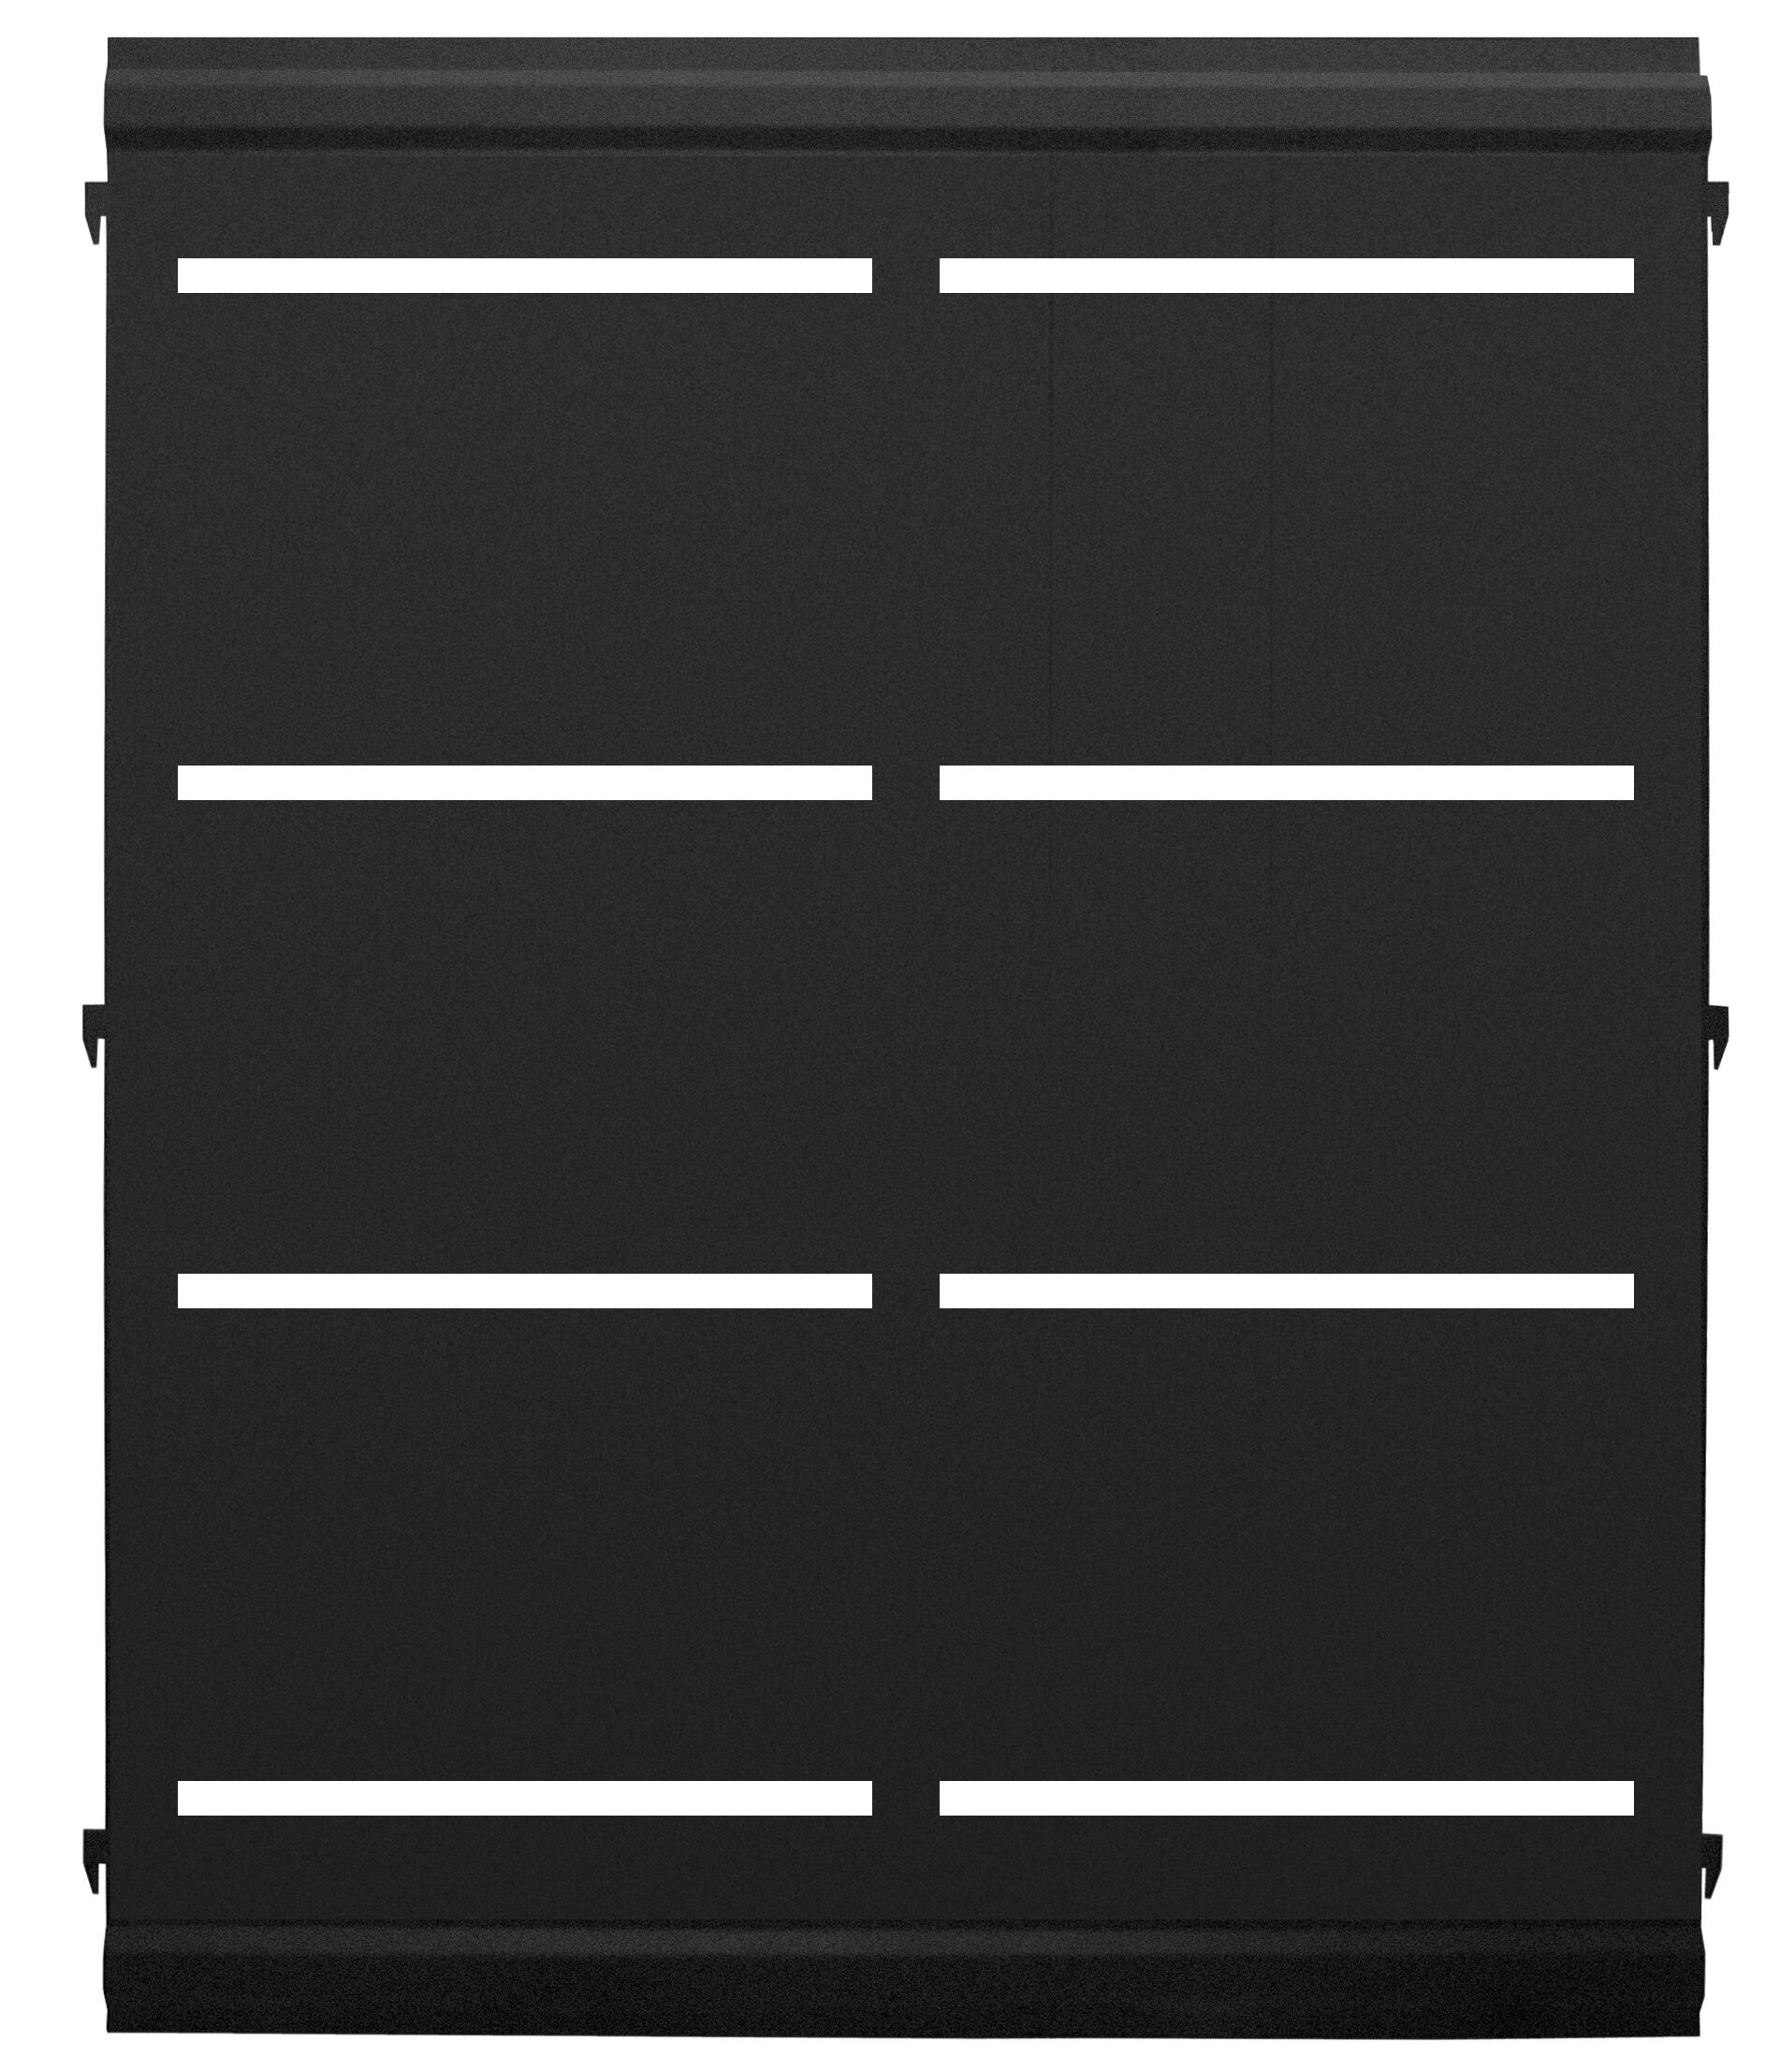 Panel remate valla acero galvanizado franja rayas negro 94x73,5 cm